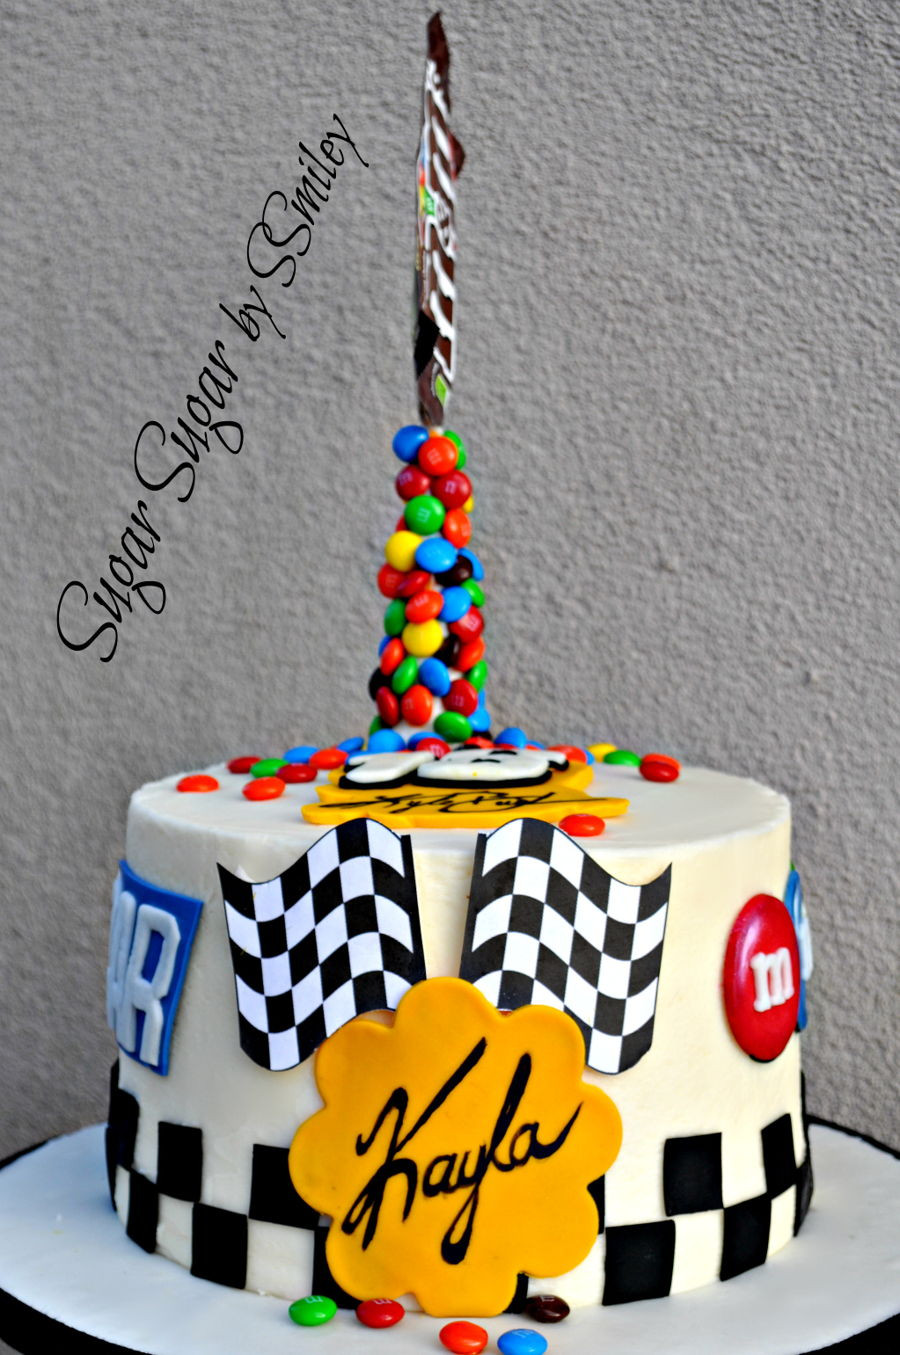 Nascar Birthday Cake
 Kyle Busch Nascar Birthday Cake CakeCentral